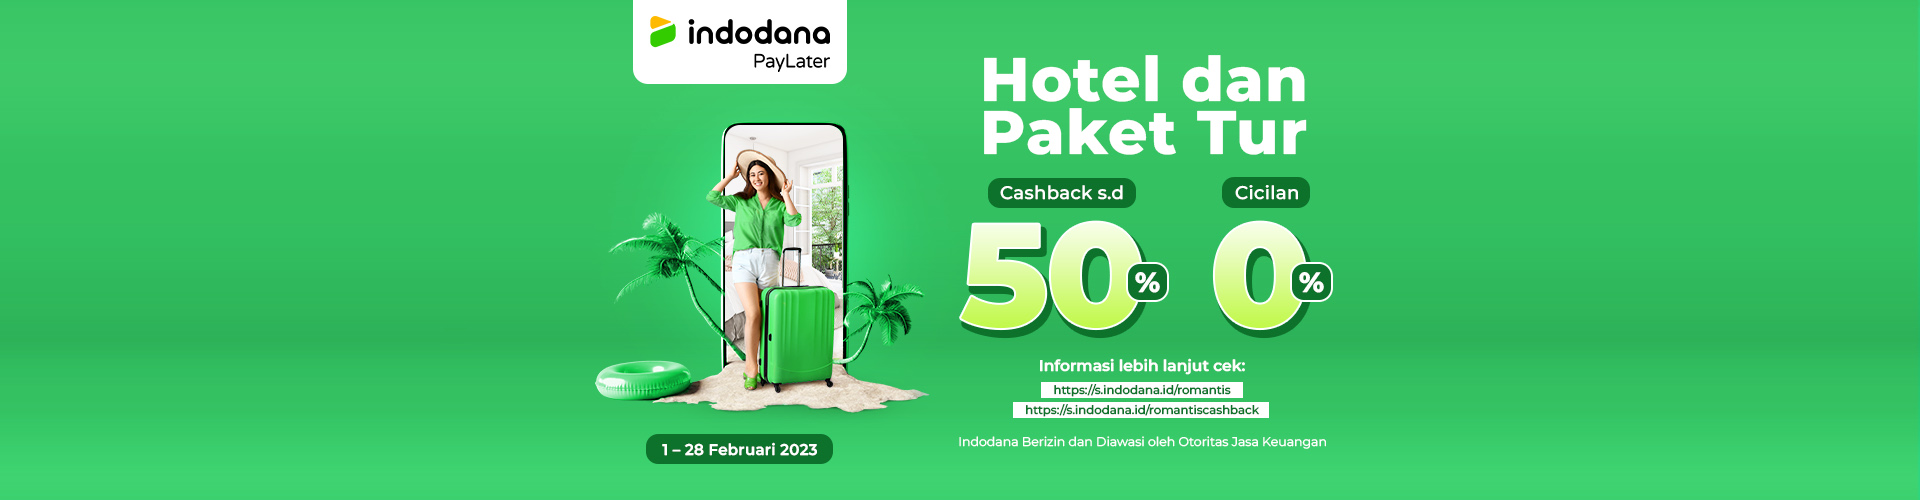 Hotel & Paket Tur Indodana